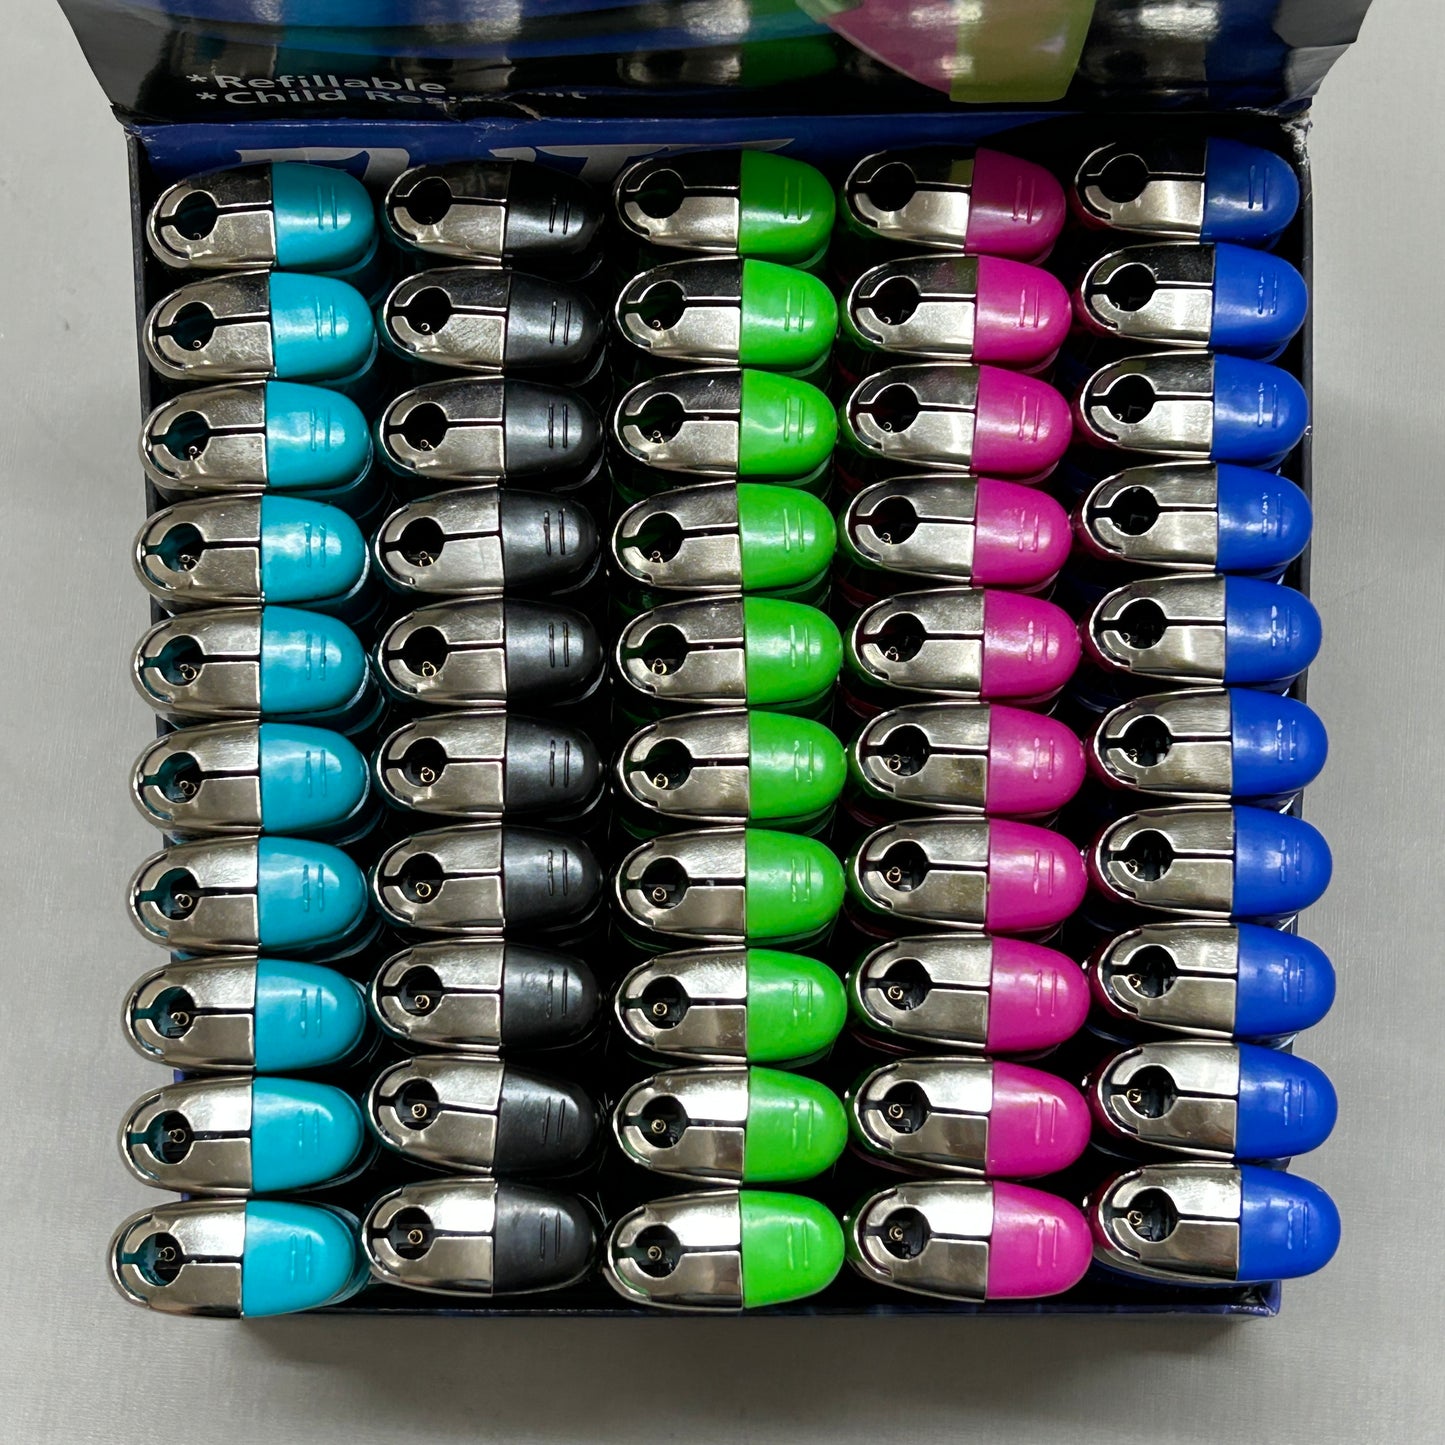 ELITE BRANDS 50-PACK! Elite Electronic Lighter Refillable Multi-Color (new)